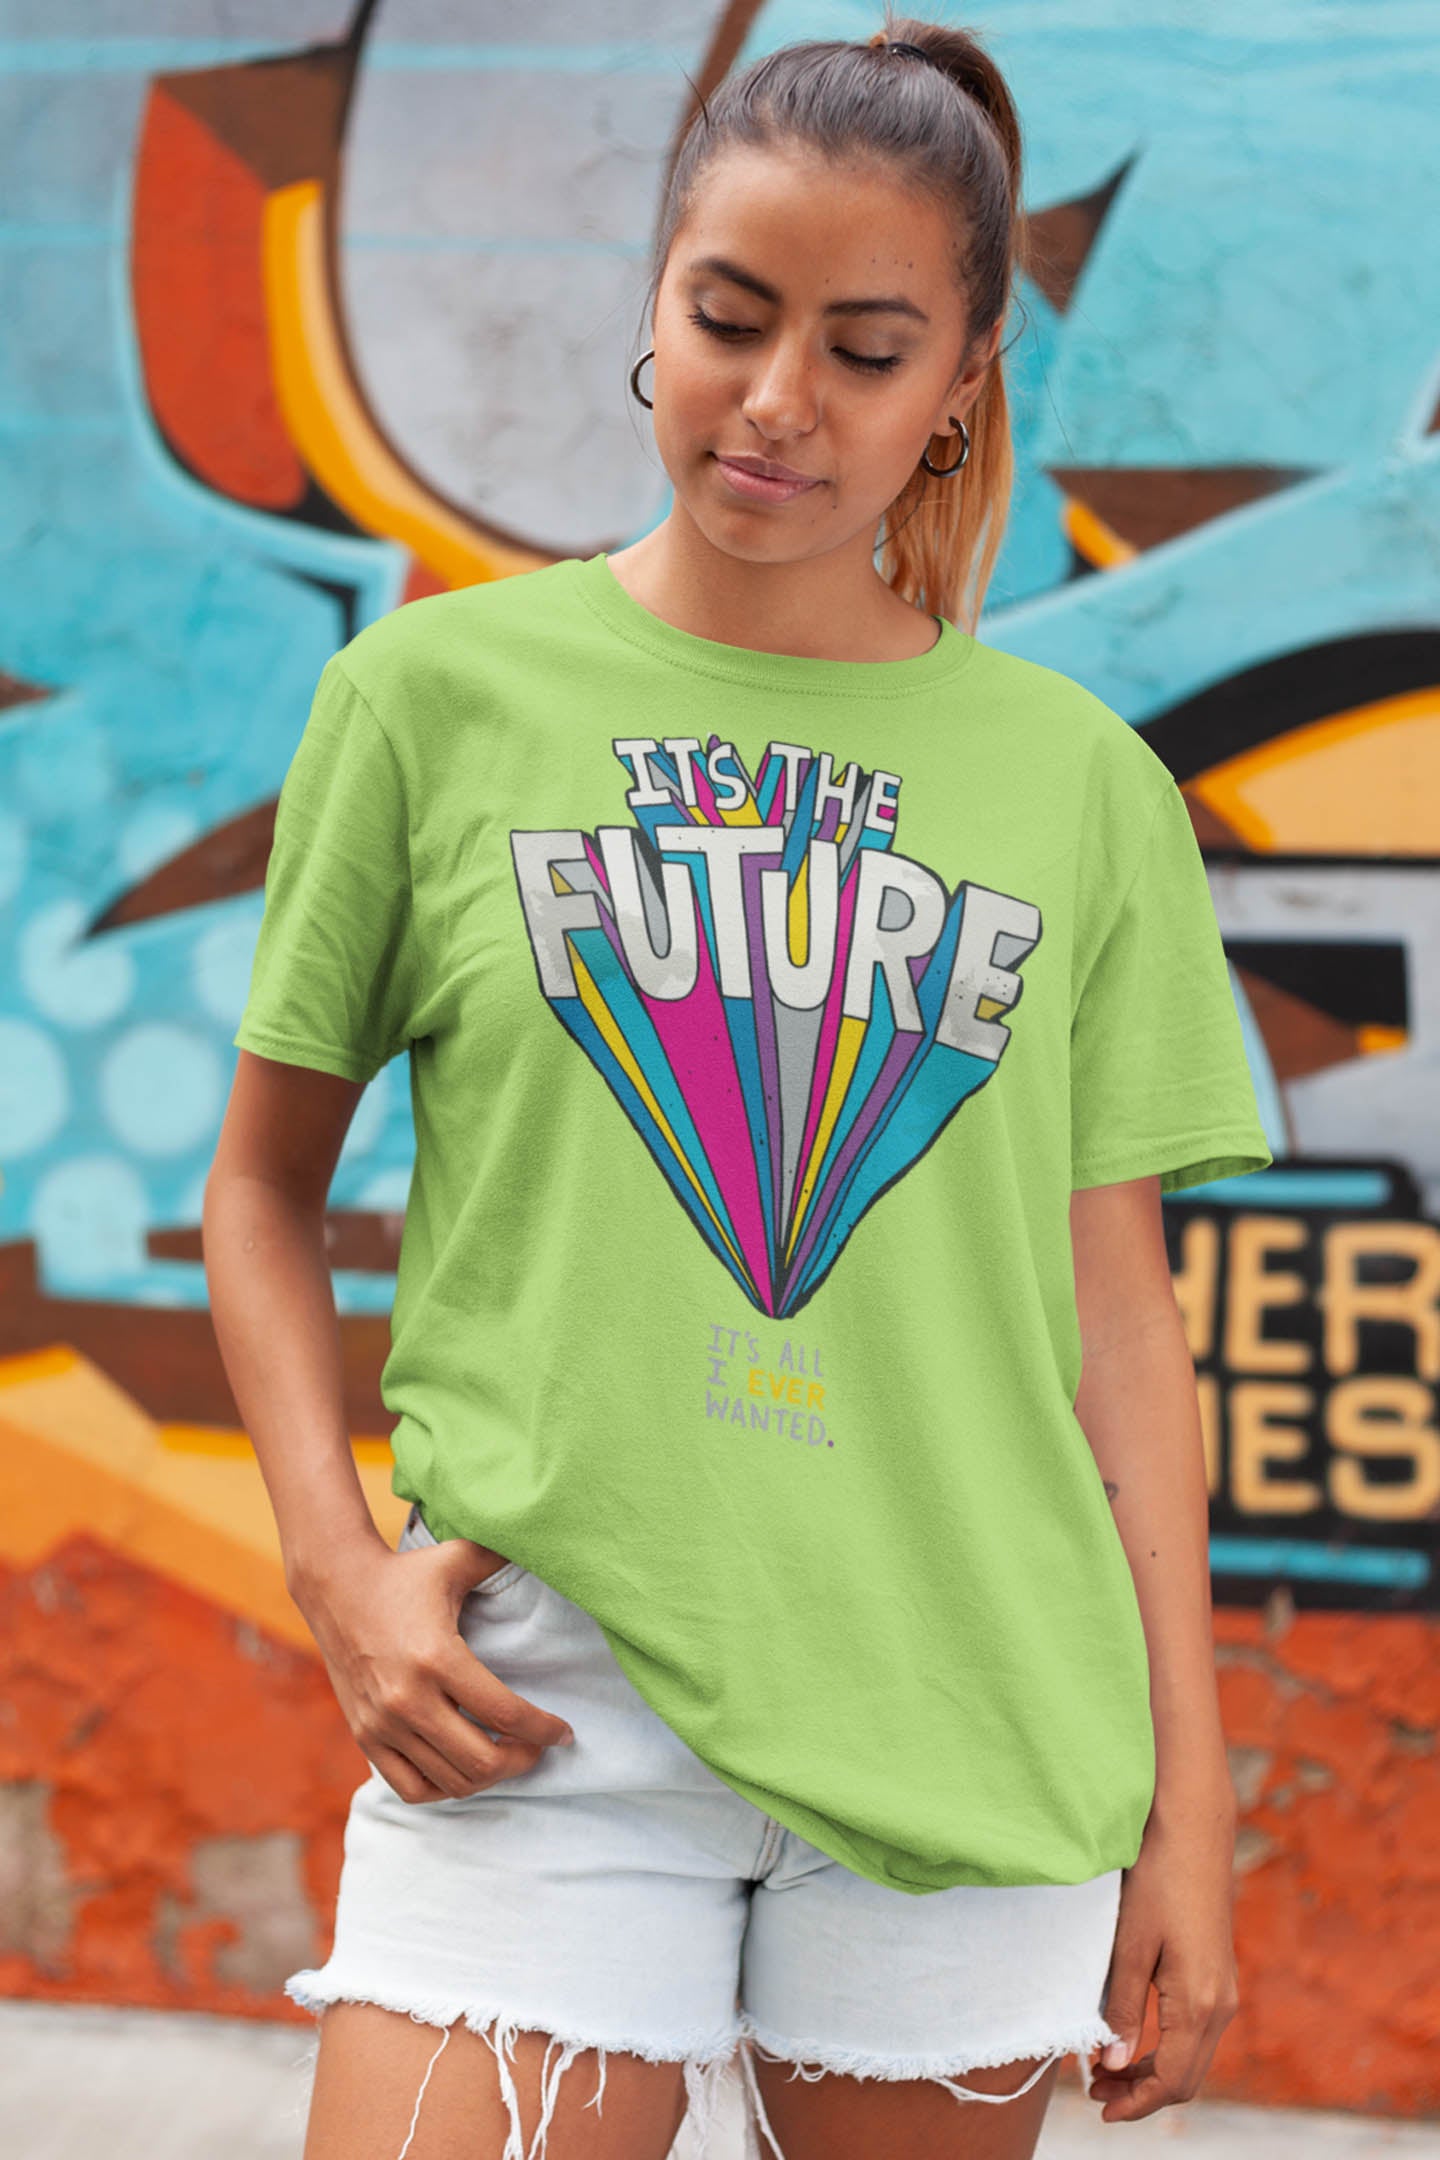 Future Oversized T-shirt